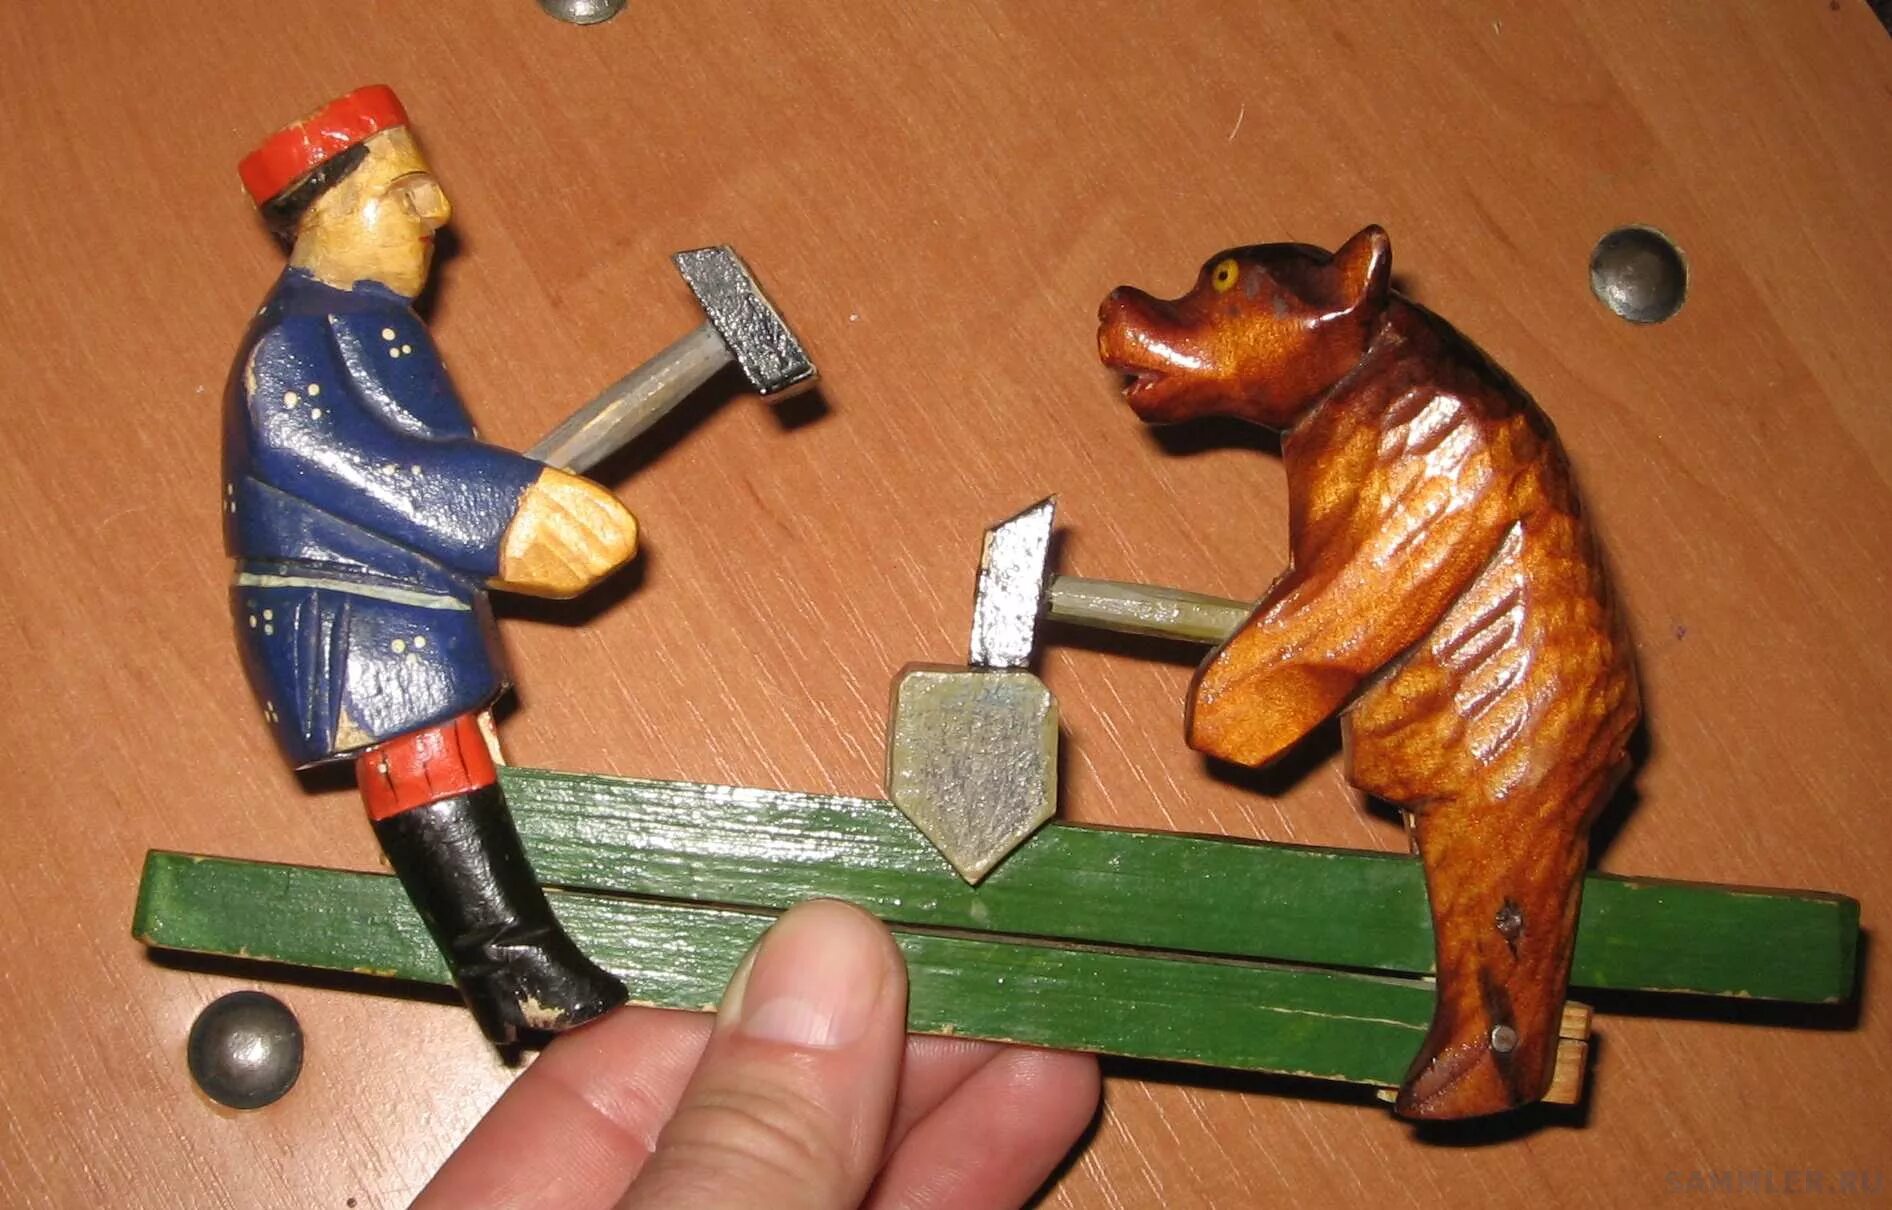 Дерево ссср. Советские деревянные игрушки. Советские игрушки из дерева. Советские детские игрушки из дерева. Деревянные игрушки 70 х.